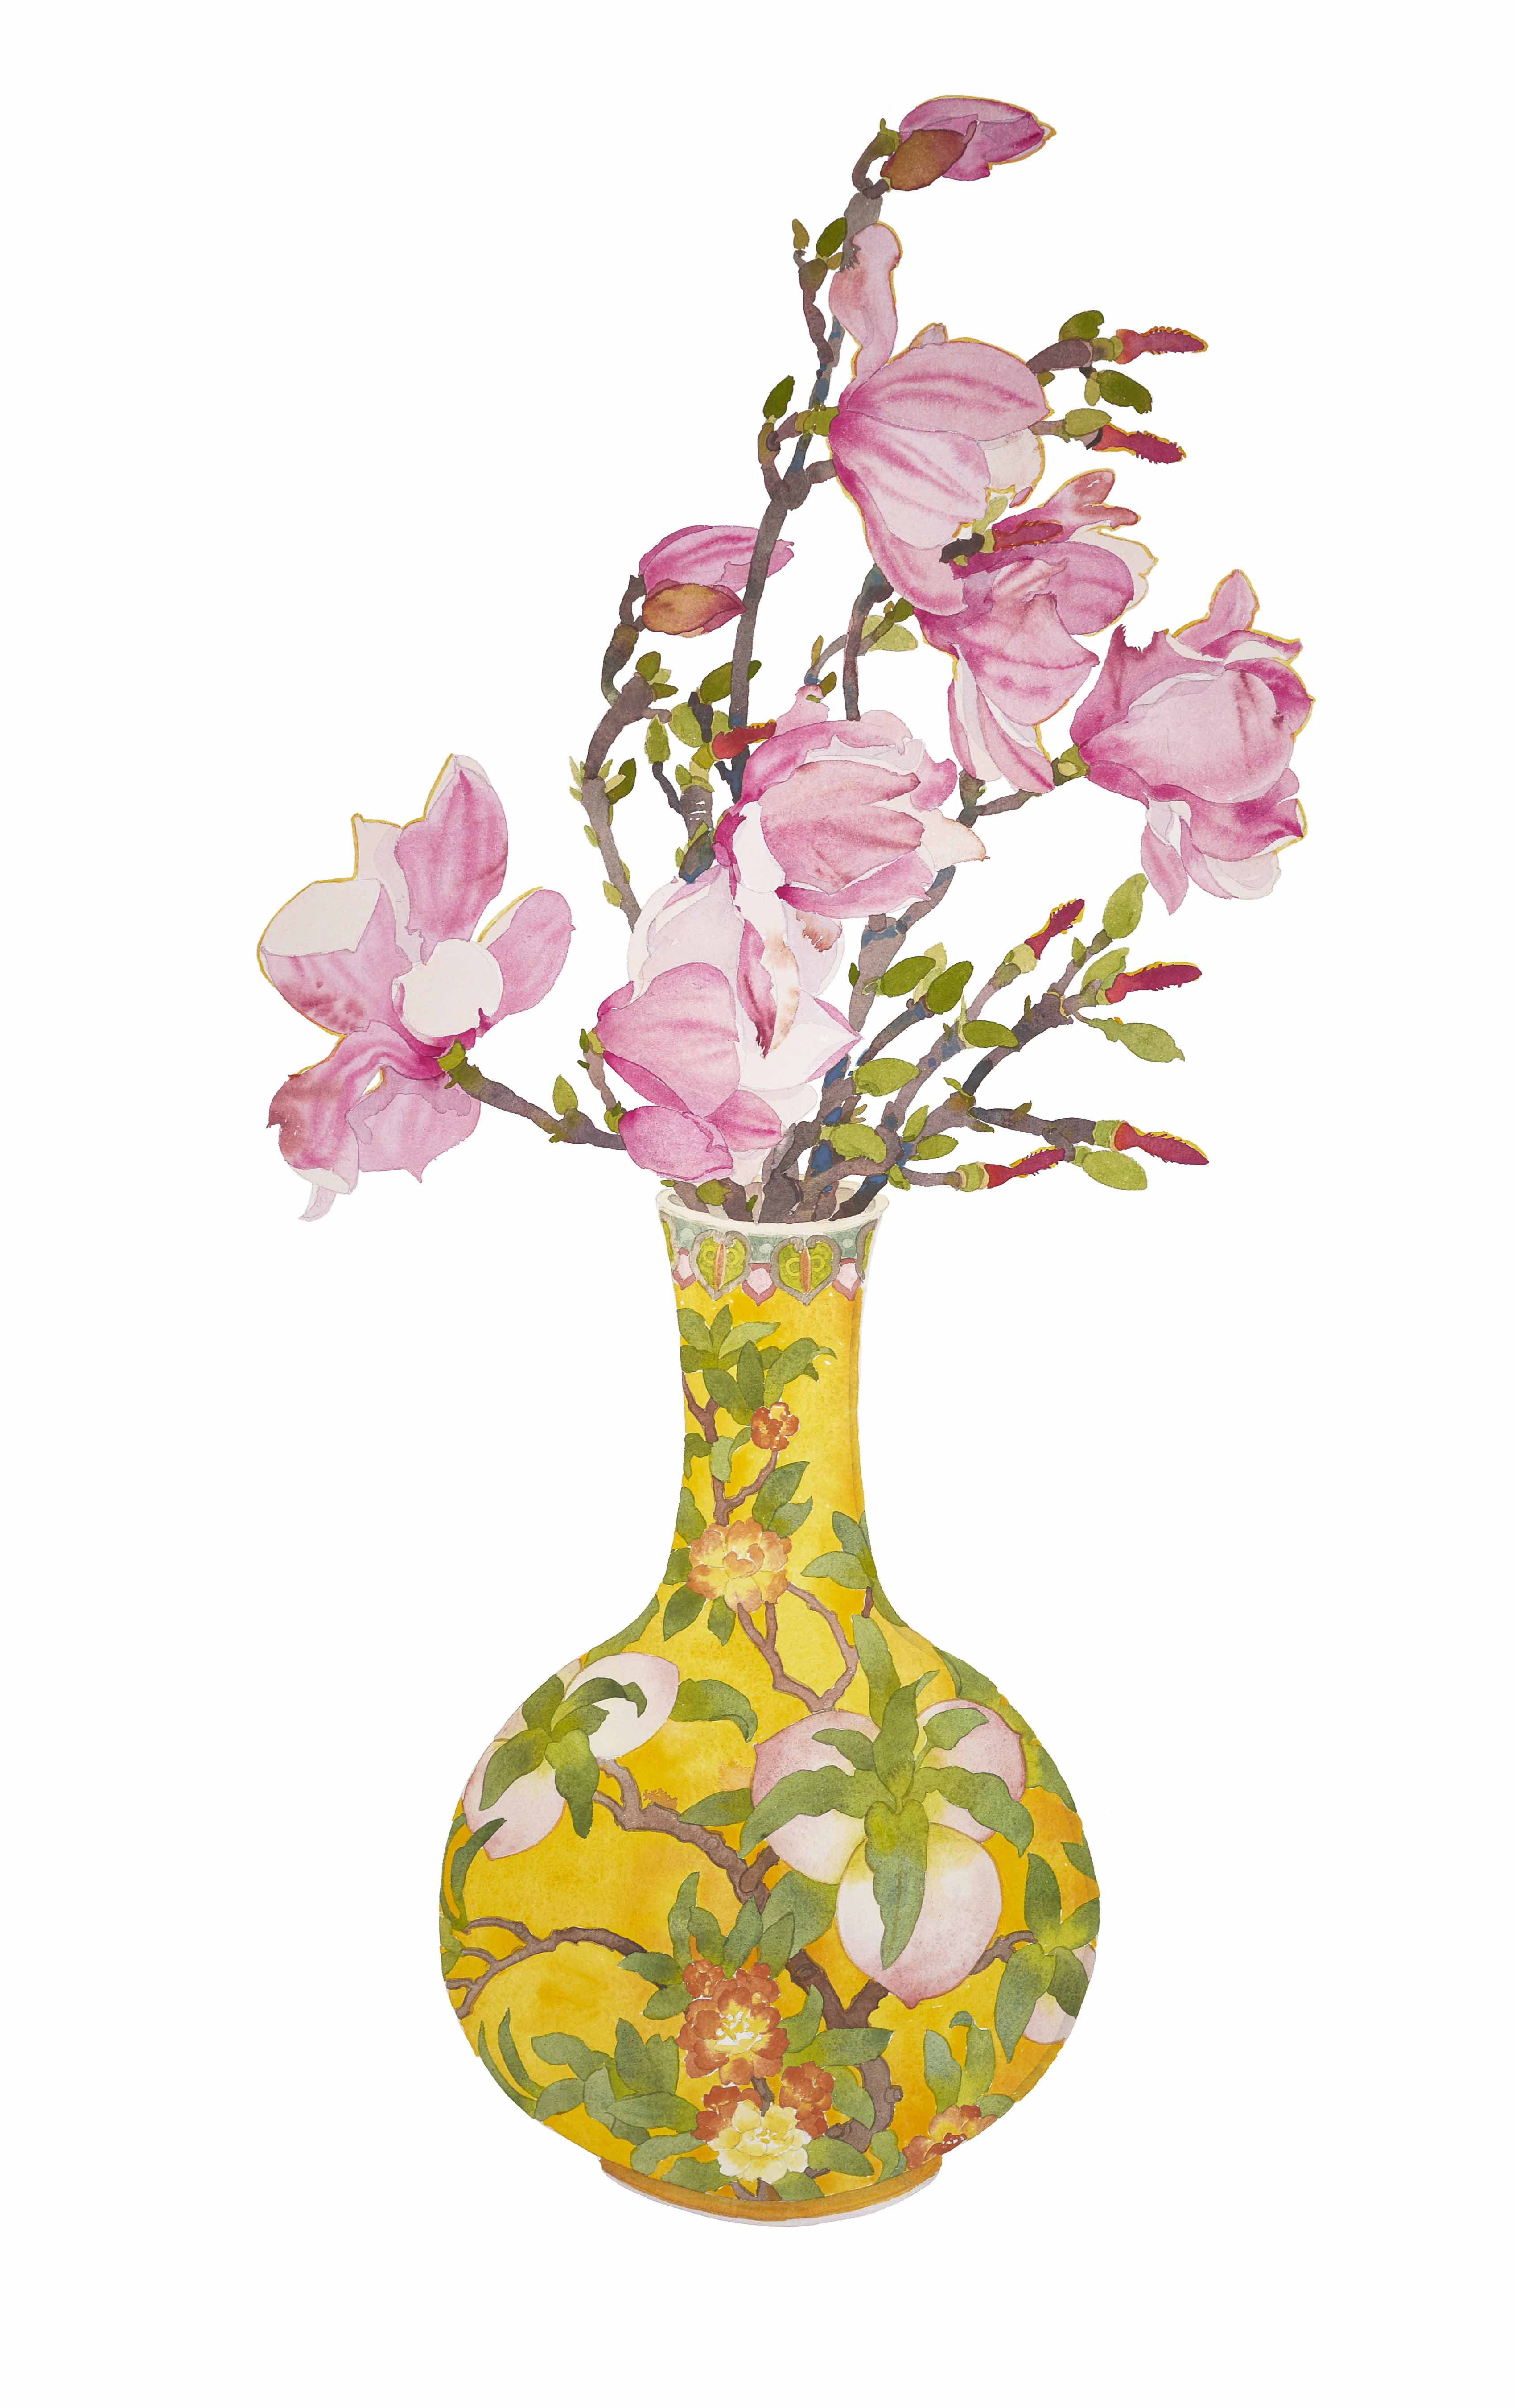 January Magnolia in a Cloisonné Vase